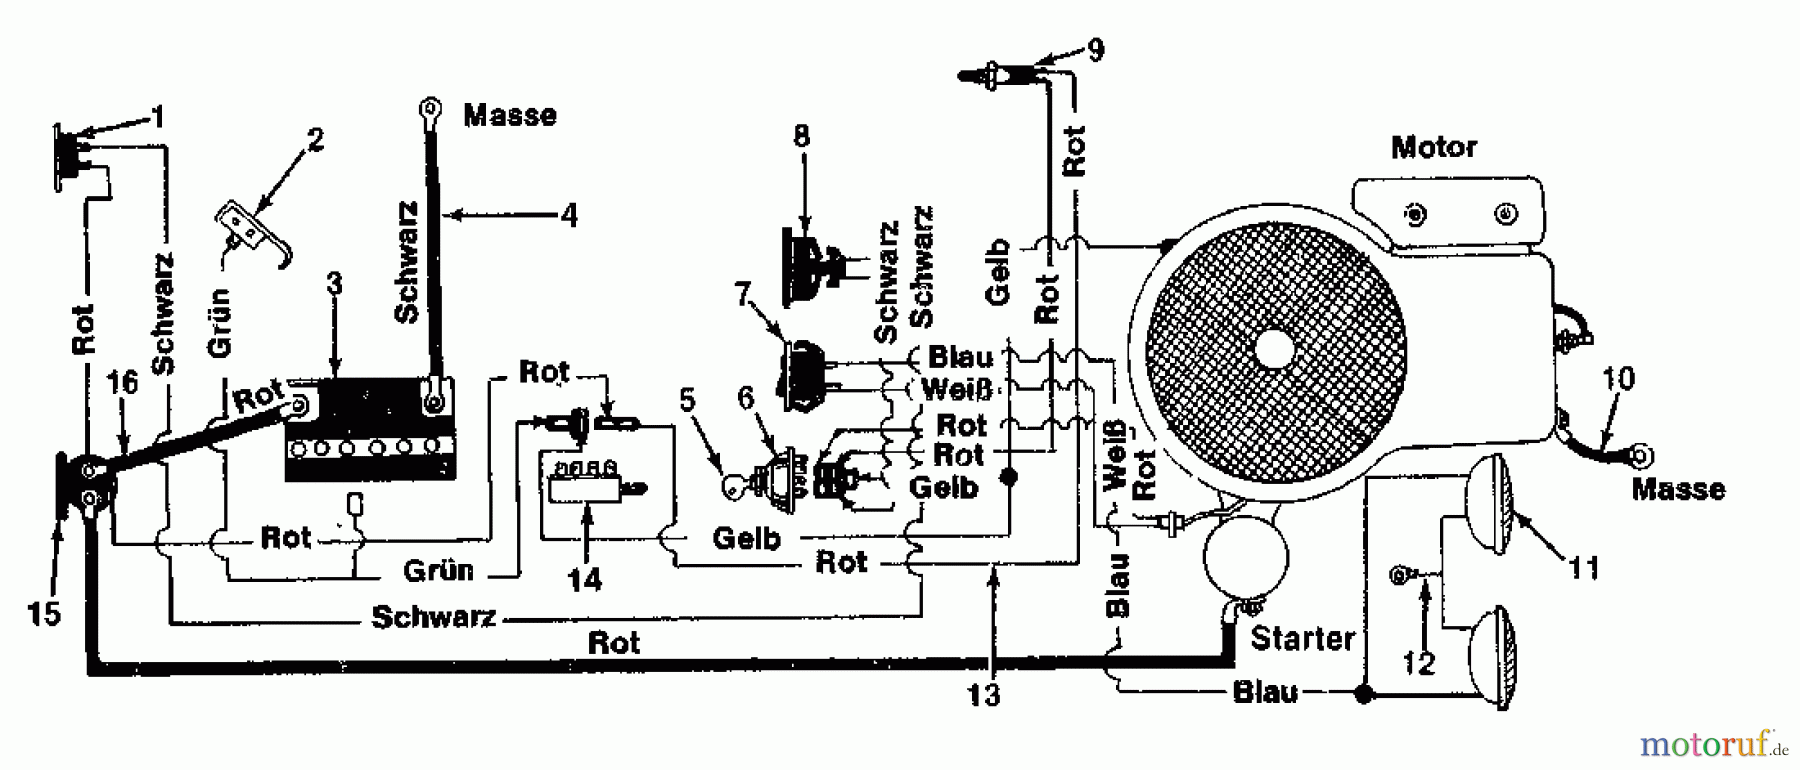  Columbia Lawn tractors 110/960 N 135-6371  (1985) Wiring diagram